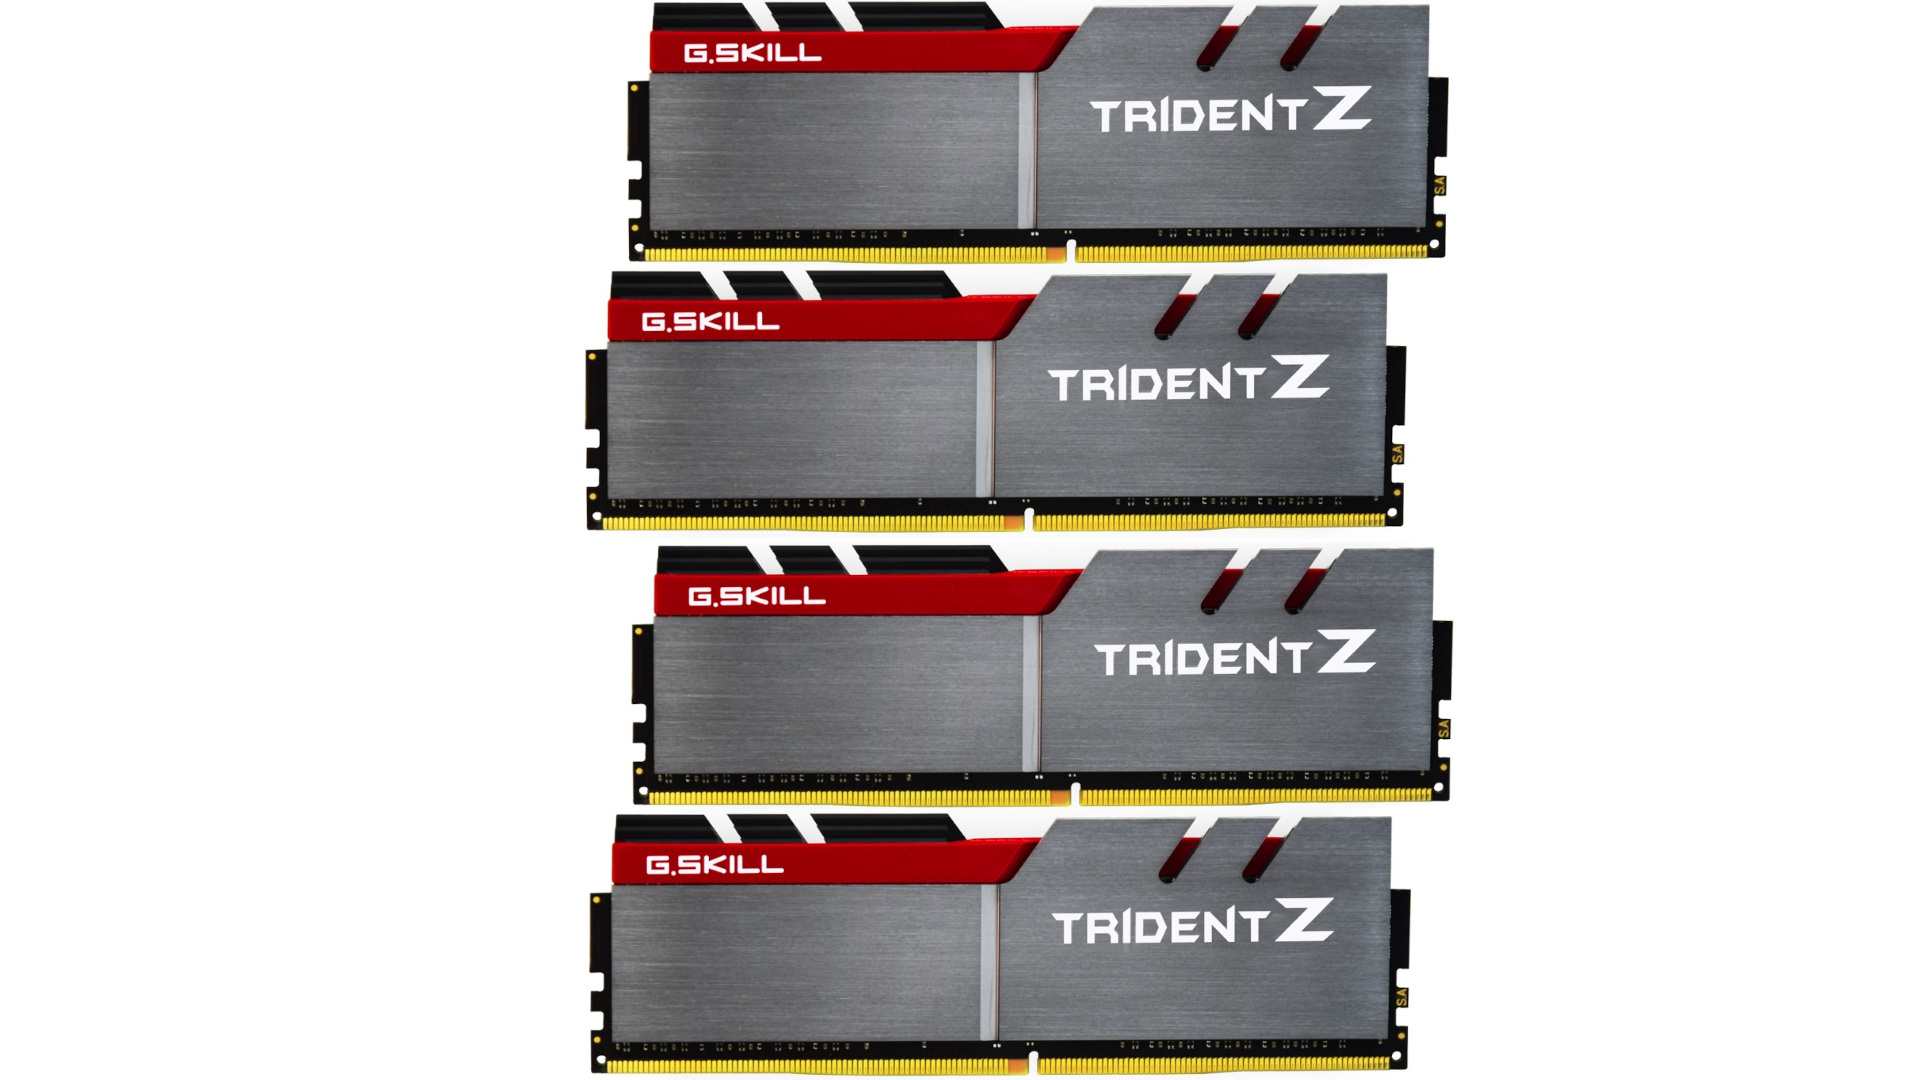 G.SKILL Trident Z DDR4 3200 C14 4x16GB 5